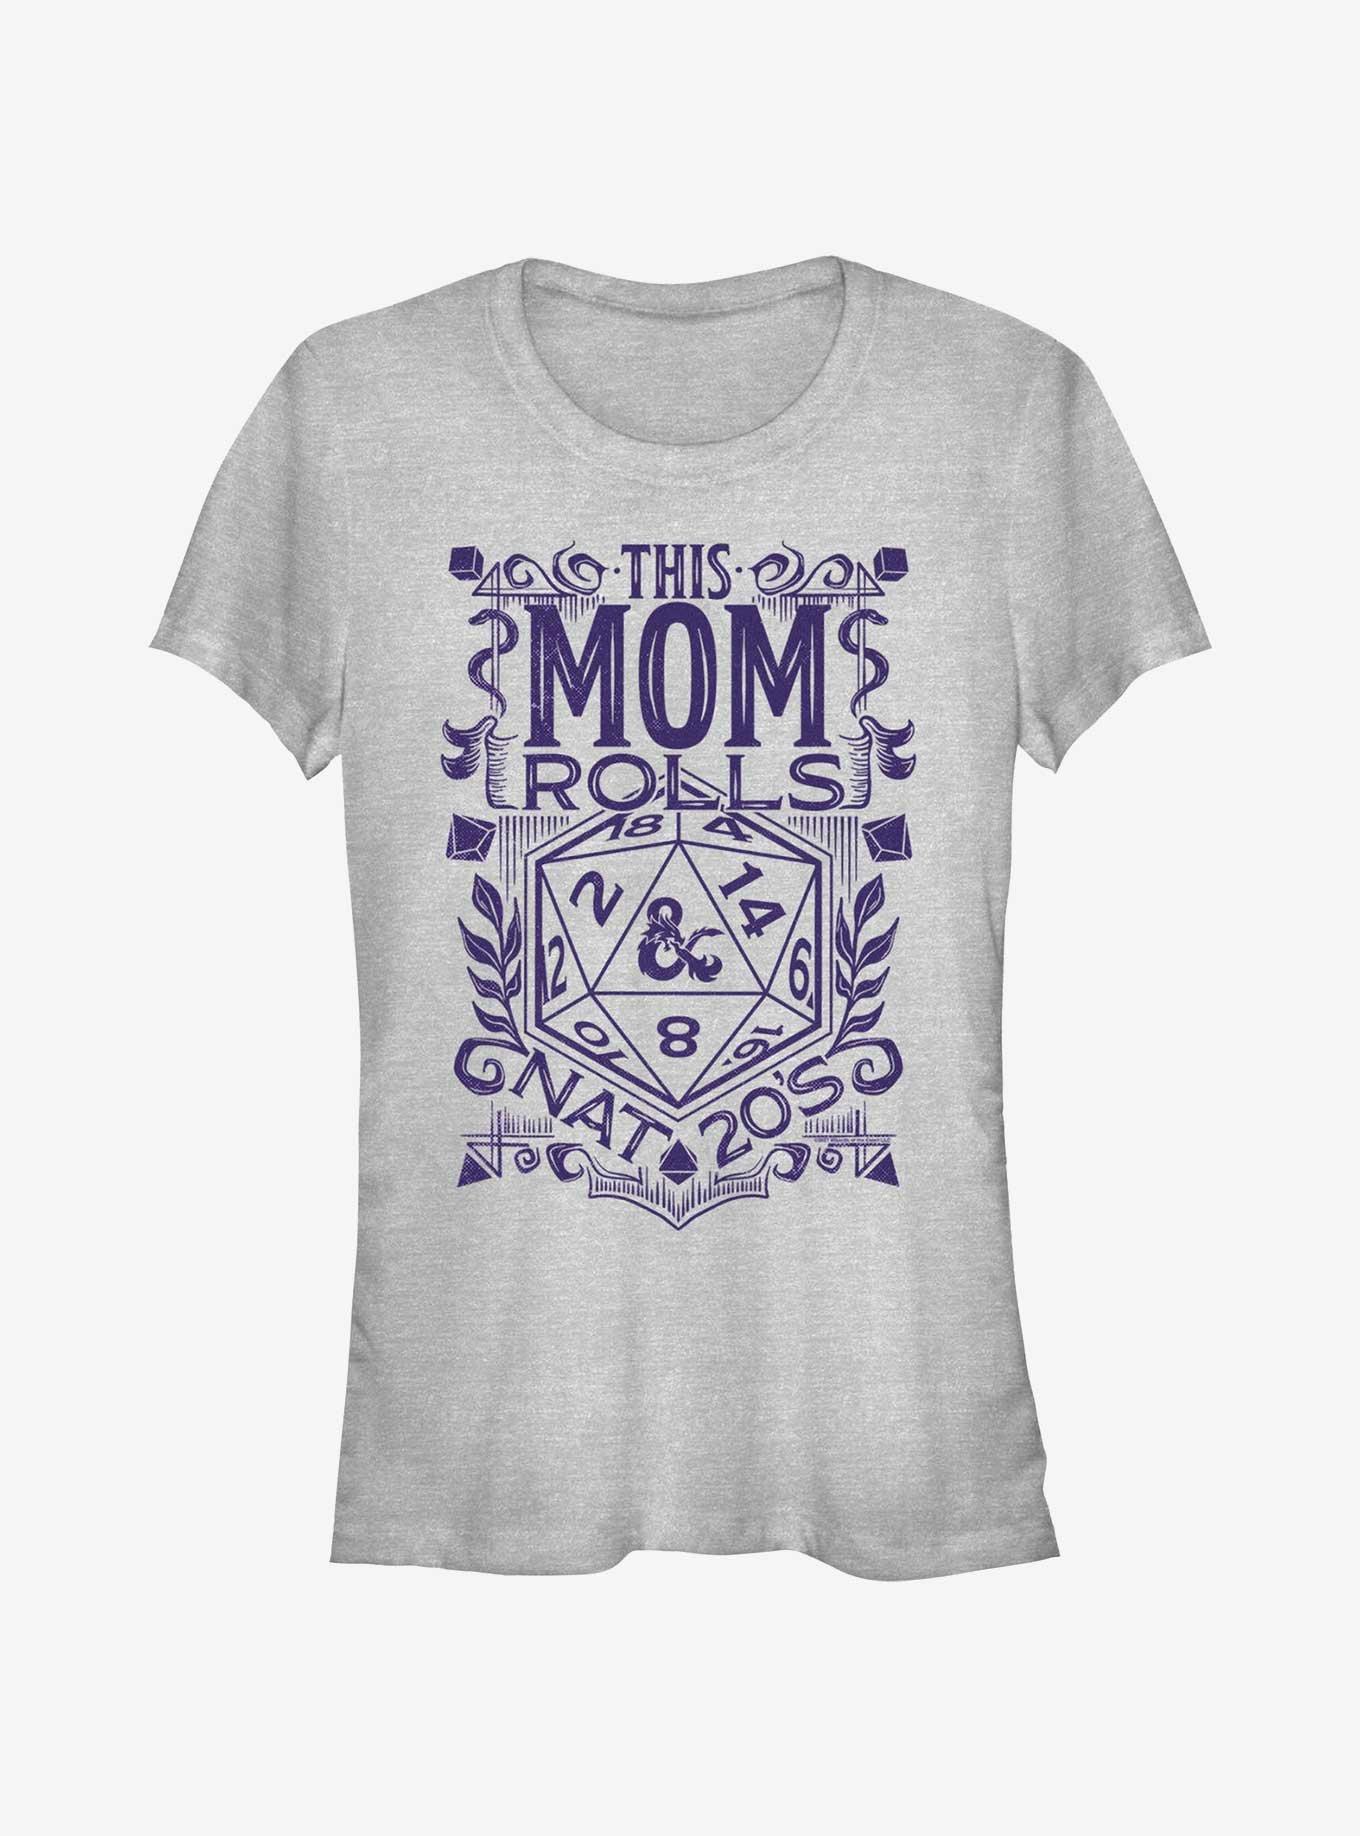 Dungeons & Dragons This Mom Rolls Nat 20's Girls T-Shirt